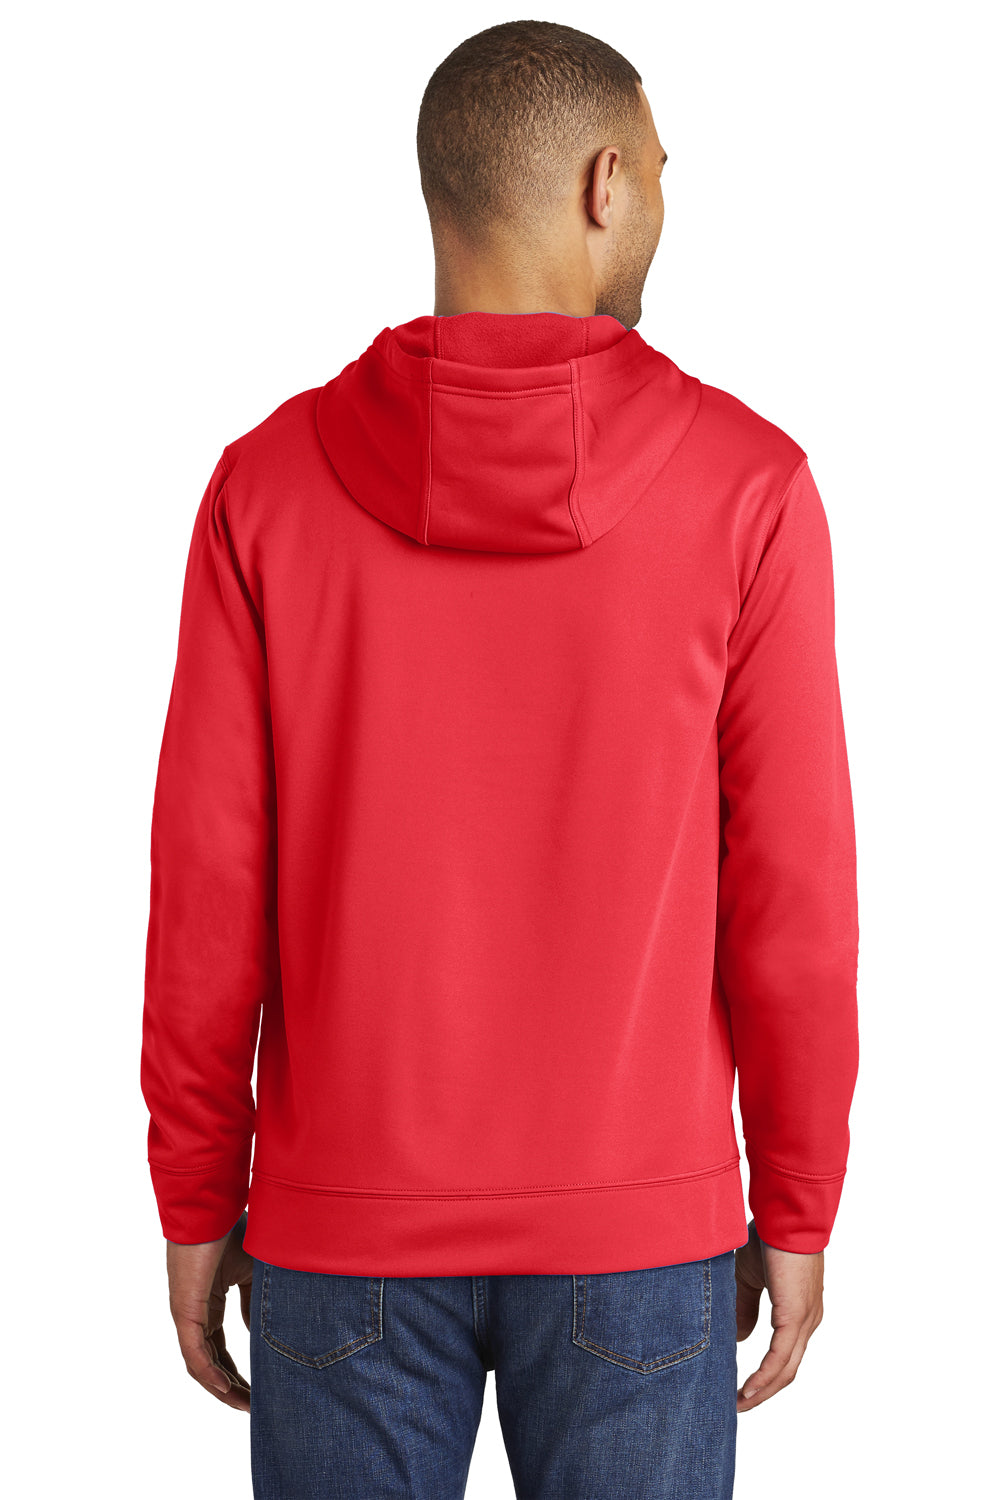 Port & Company PC590H Mens Dry Zone Performance Moisture Wicking Fleece Hooded Sweatshirt Hoodie Red Back